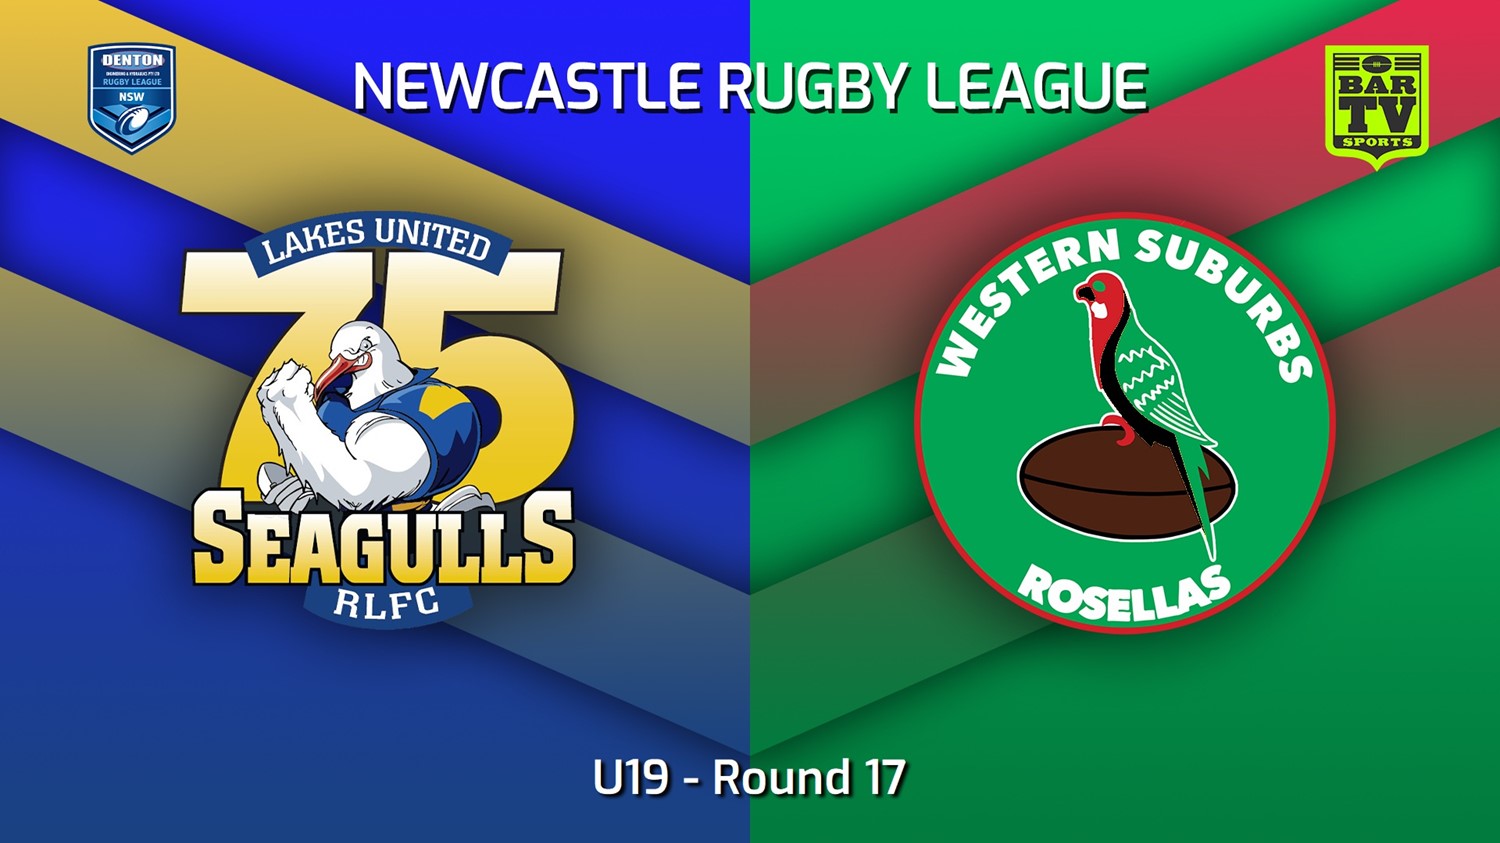 220730-Newcastle Round 17 - U19 - Lakes United v Western Suburbs Rosellas Slate Image